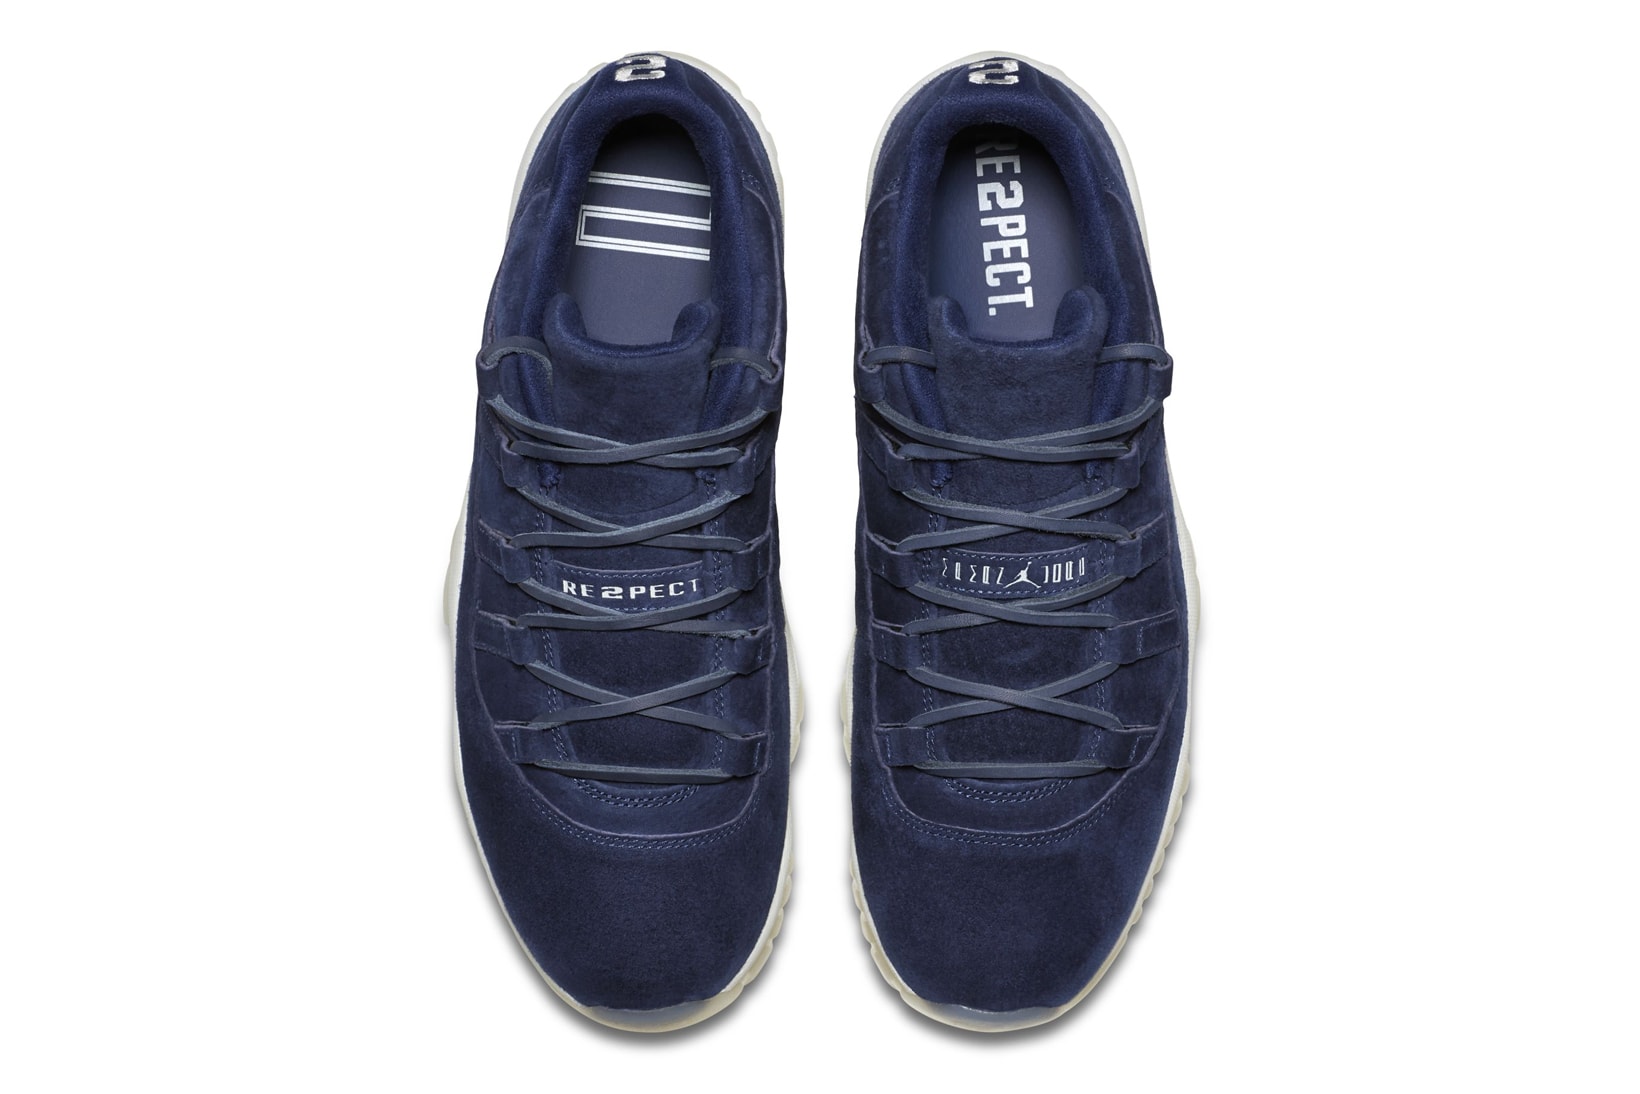 Derek Jeter Air Jordan 11 Low RE2PECT New York Yankees Jordan Brand AJ11 JB Sneakers Suede Navy Blue White Release Date Info Drops